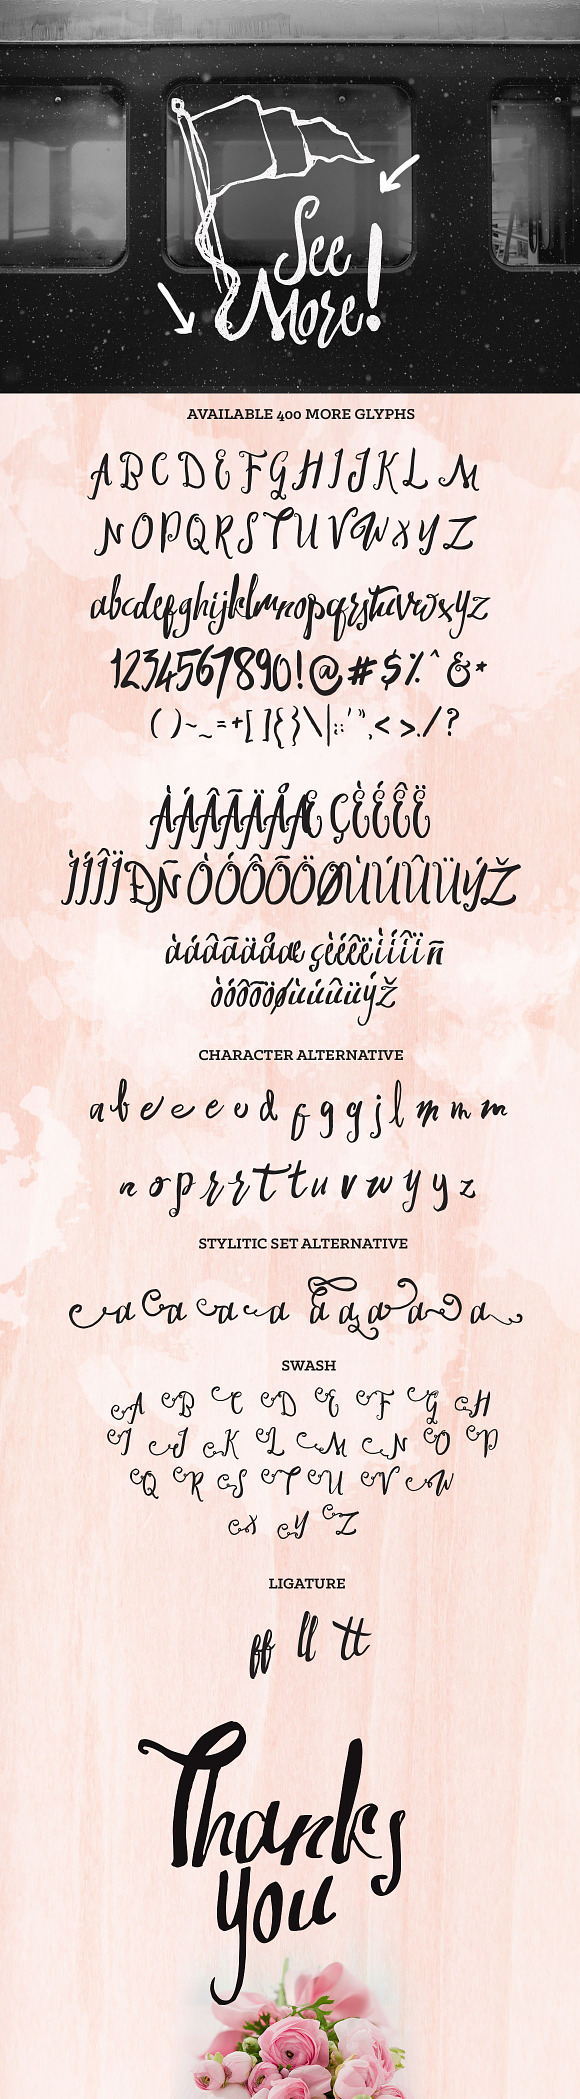 Swirlesque Typeface + Bonus in Script Fonts - product preview 3